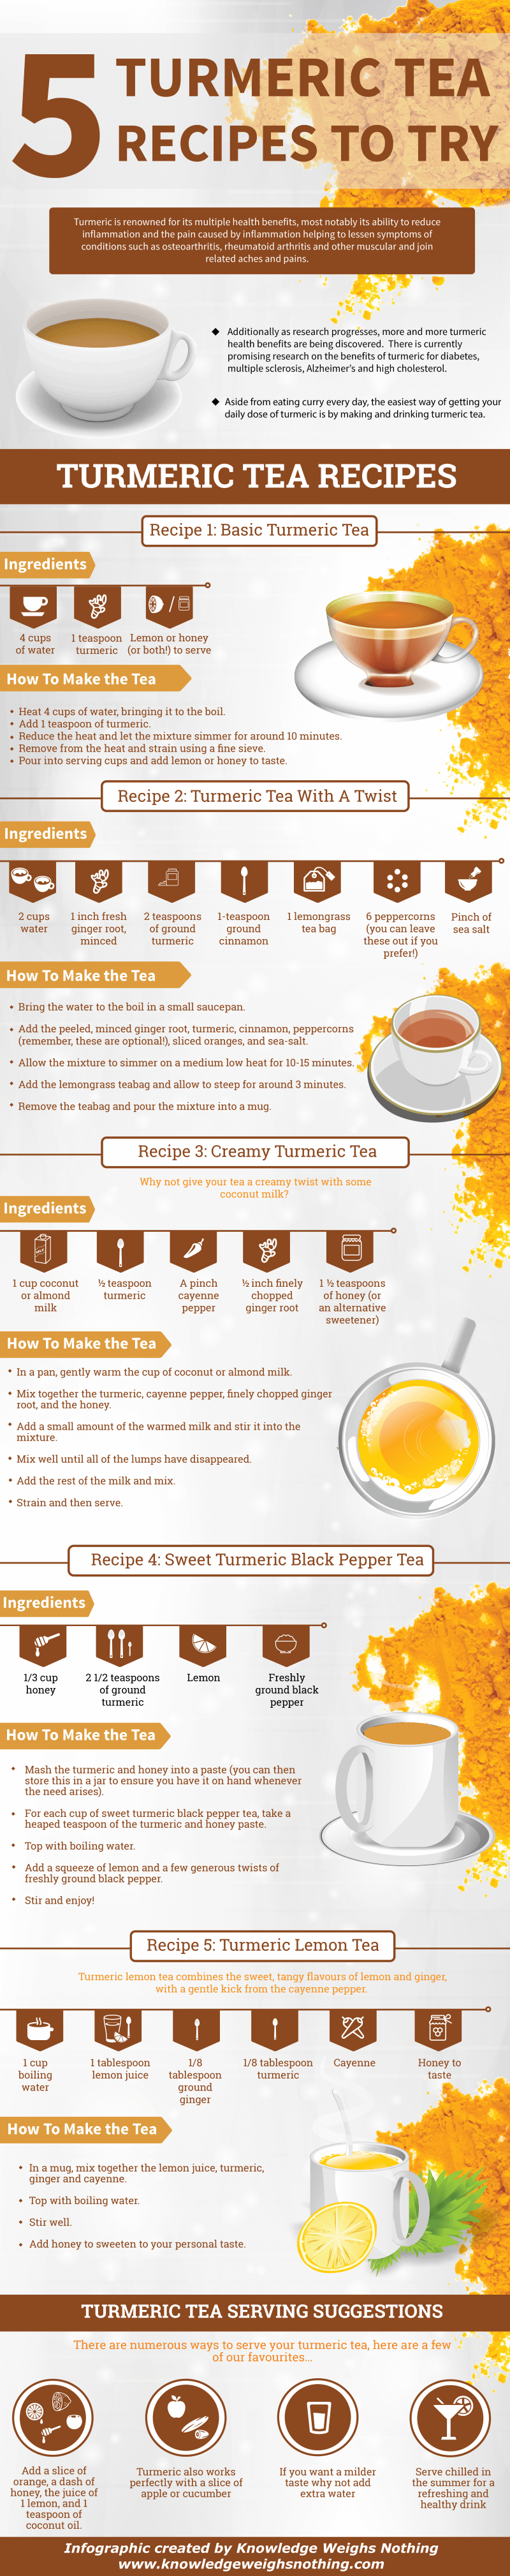 5 Turmeric Tea Recipes For Better Health Infographic